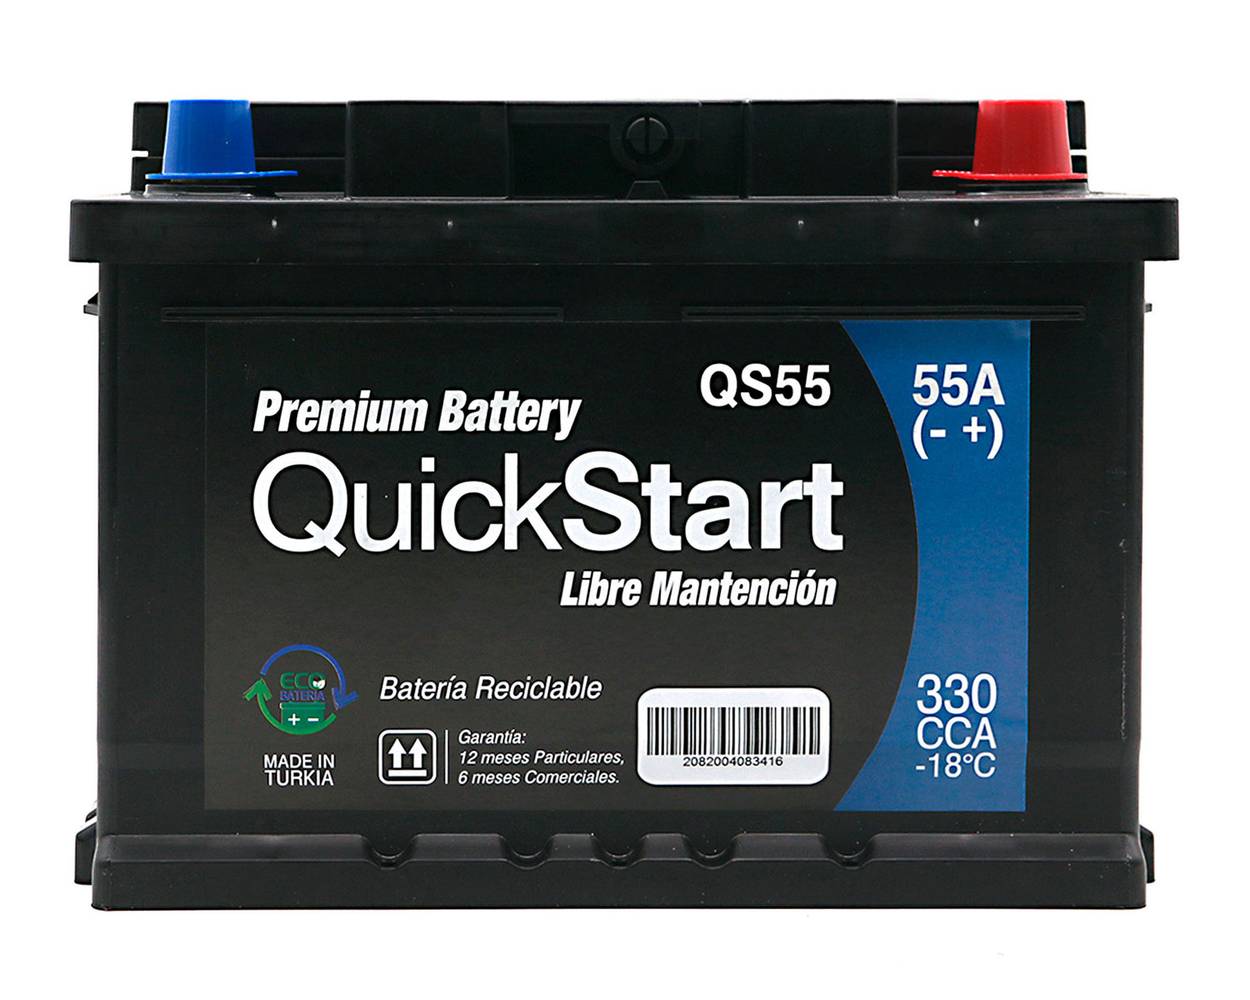 Quick start batería 55ah 330cca derecho qs55 (1 batería)